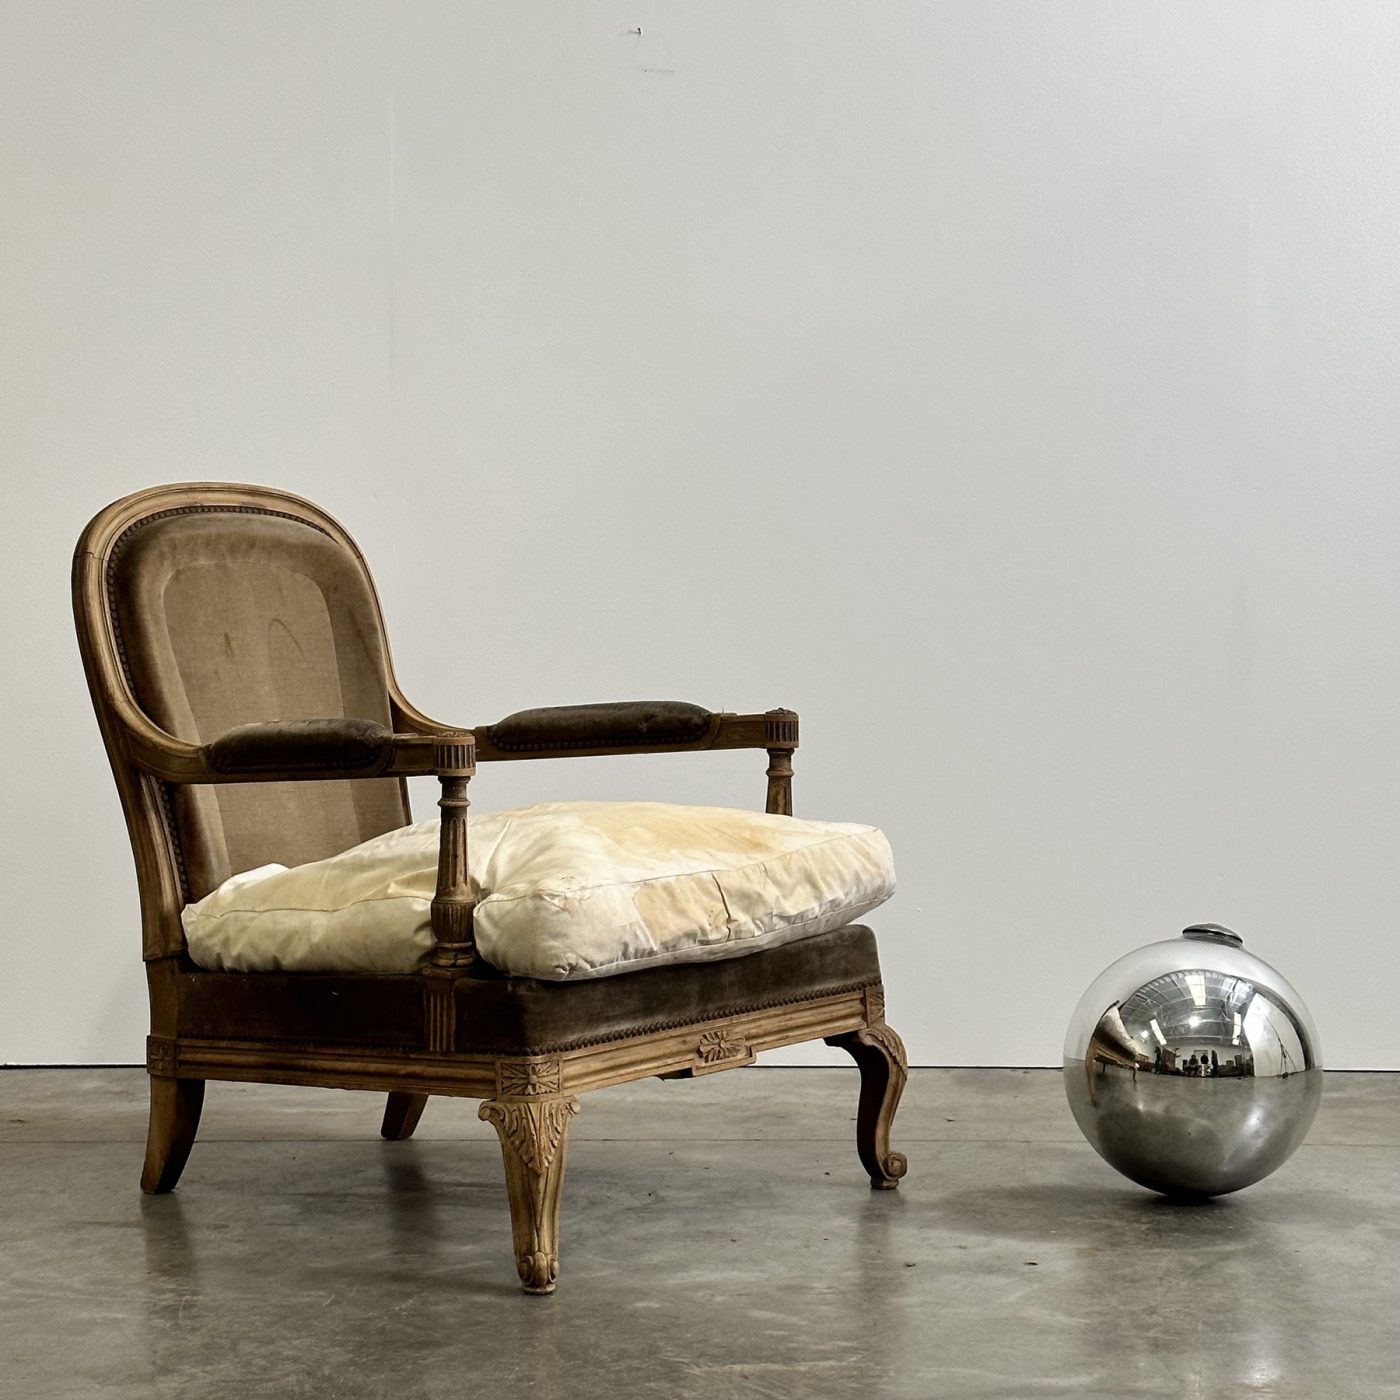 objet-vagabond-armchair0007